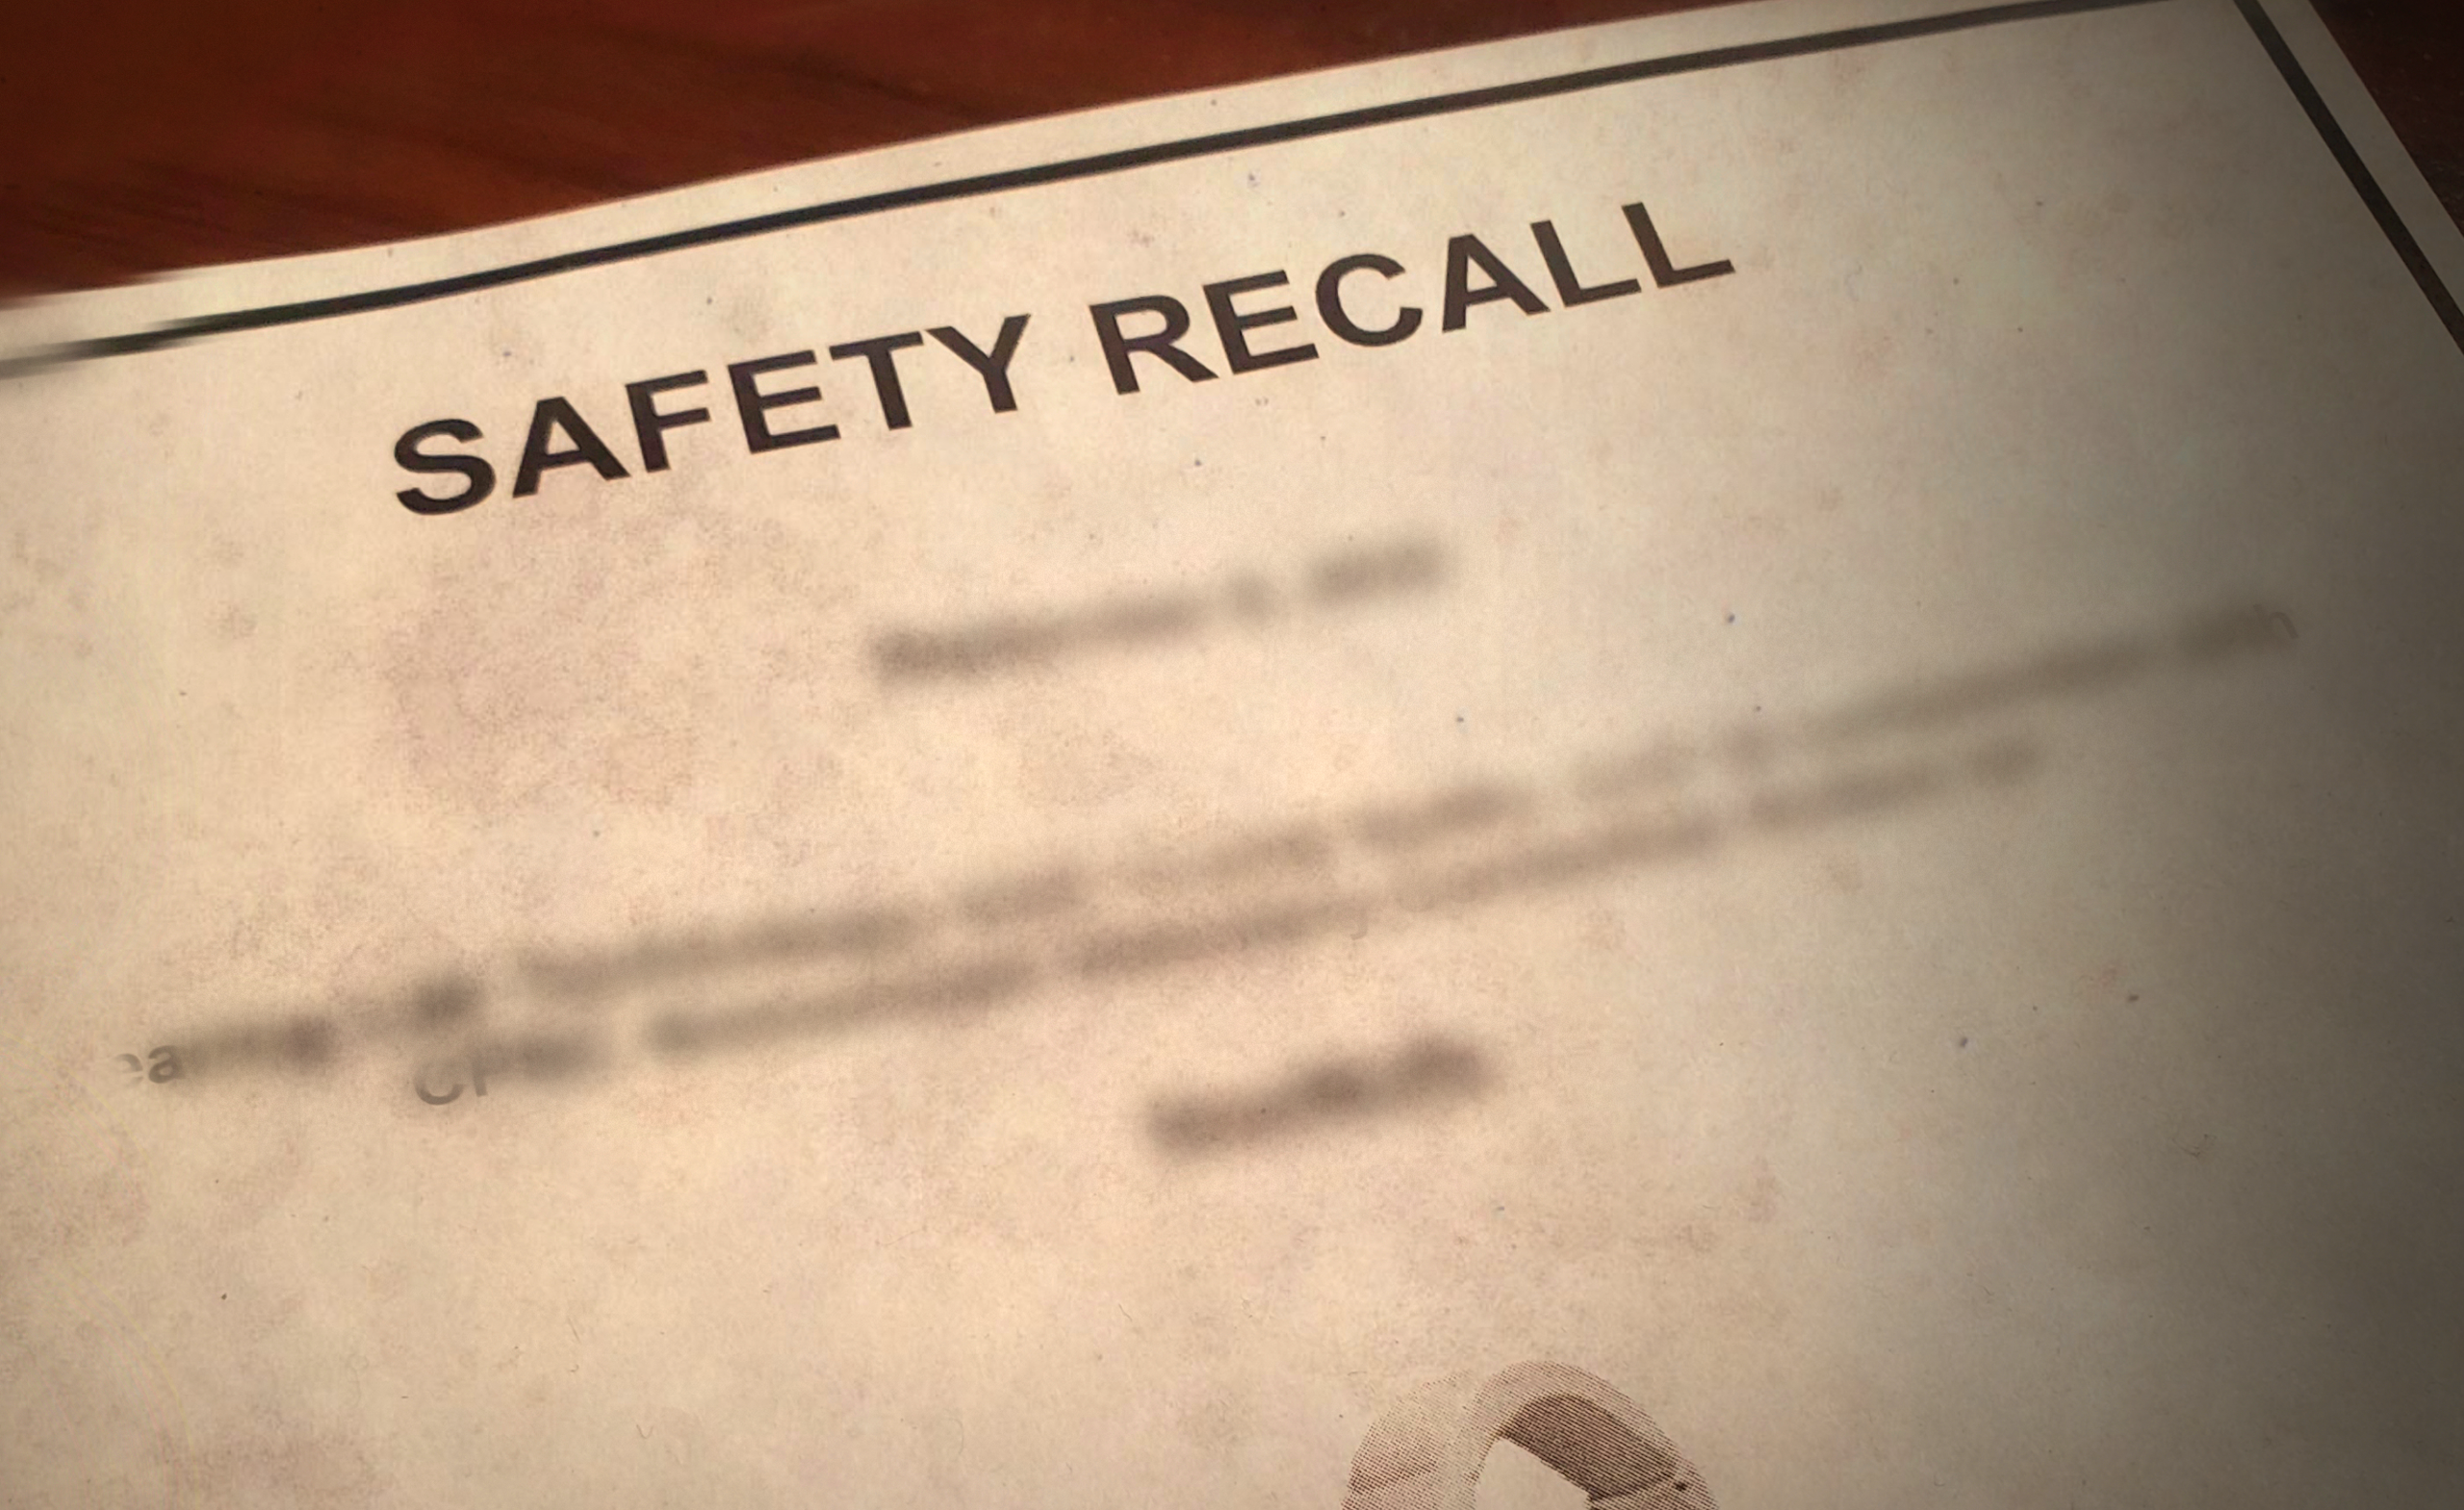 Safety recall notice